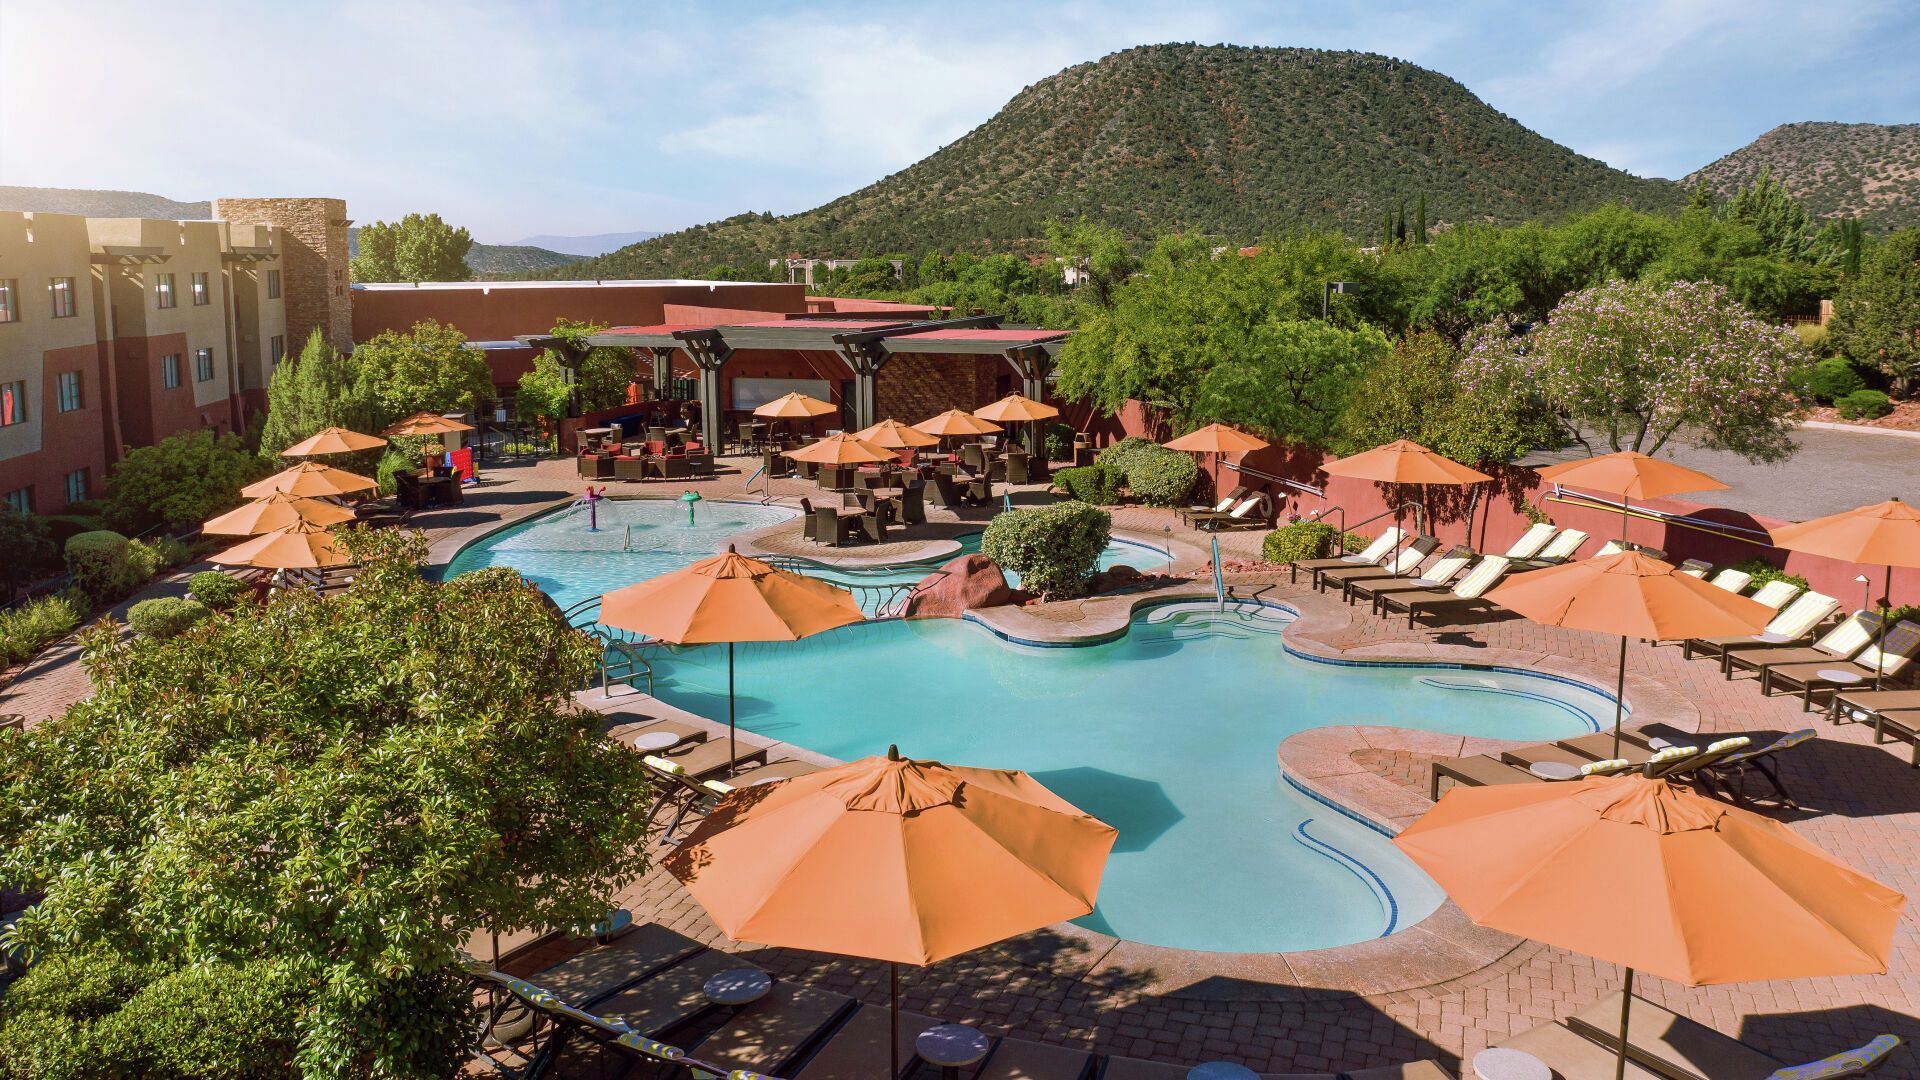 Best resorts in Sedona, Arizona: Where to go to see Red Rocks